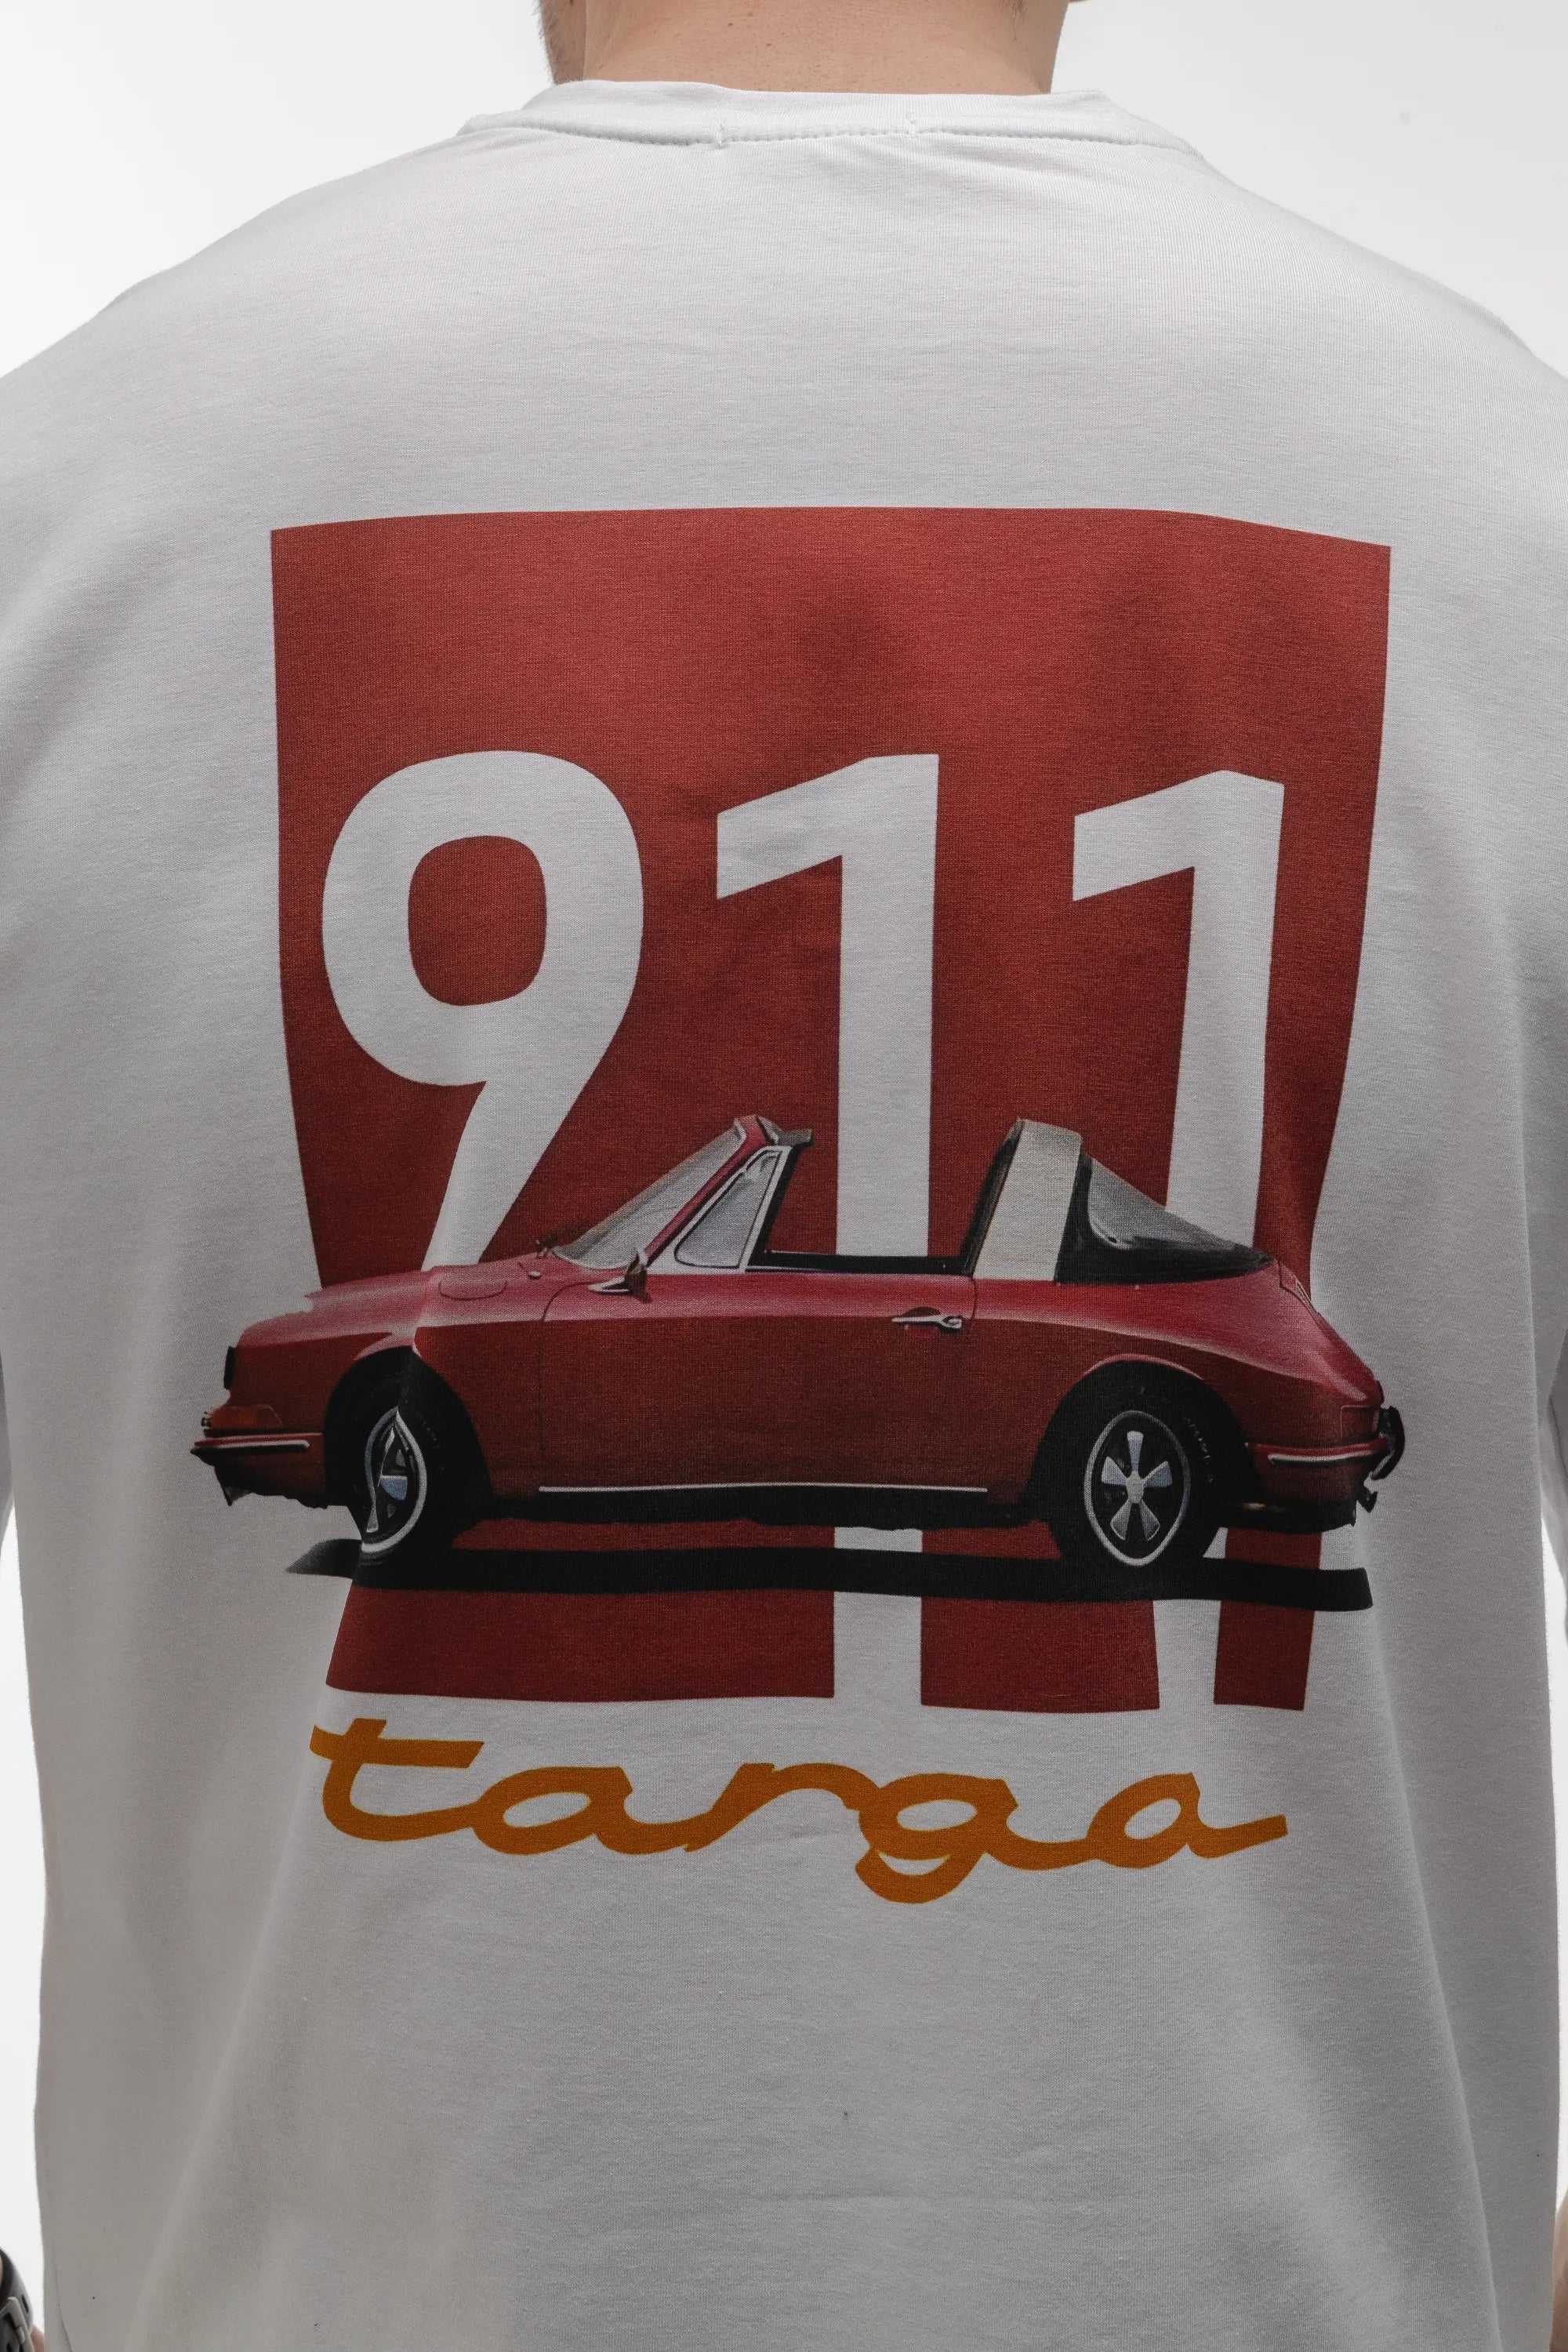 T-shirt Porsche 911 Targa Morning Star